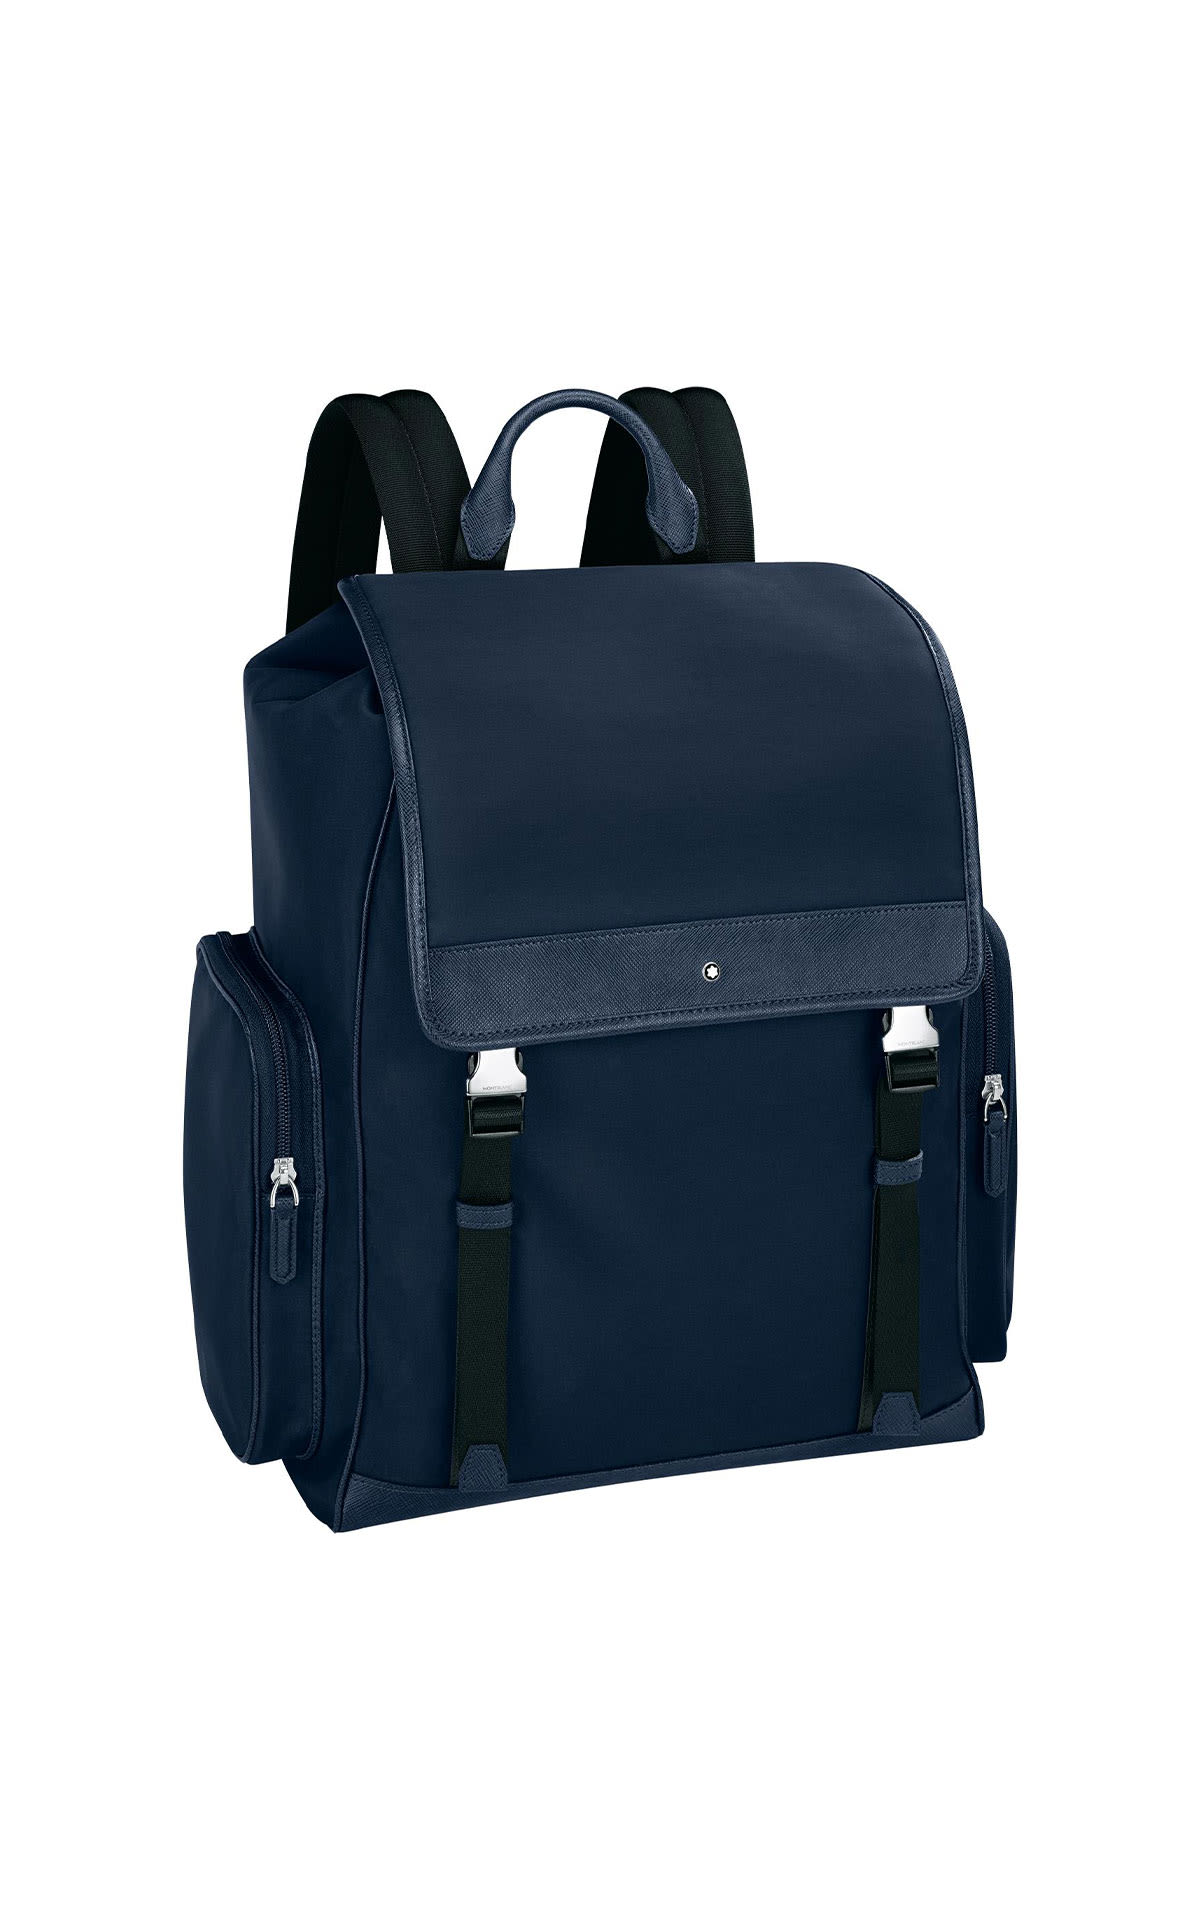 Montblanc Satorial jet backpack medium blue from Bicester Village